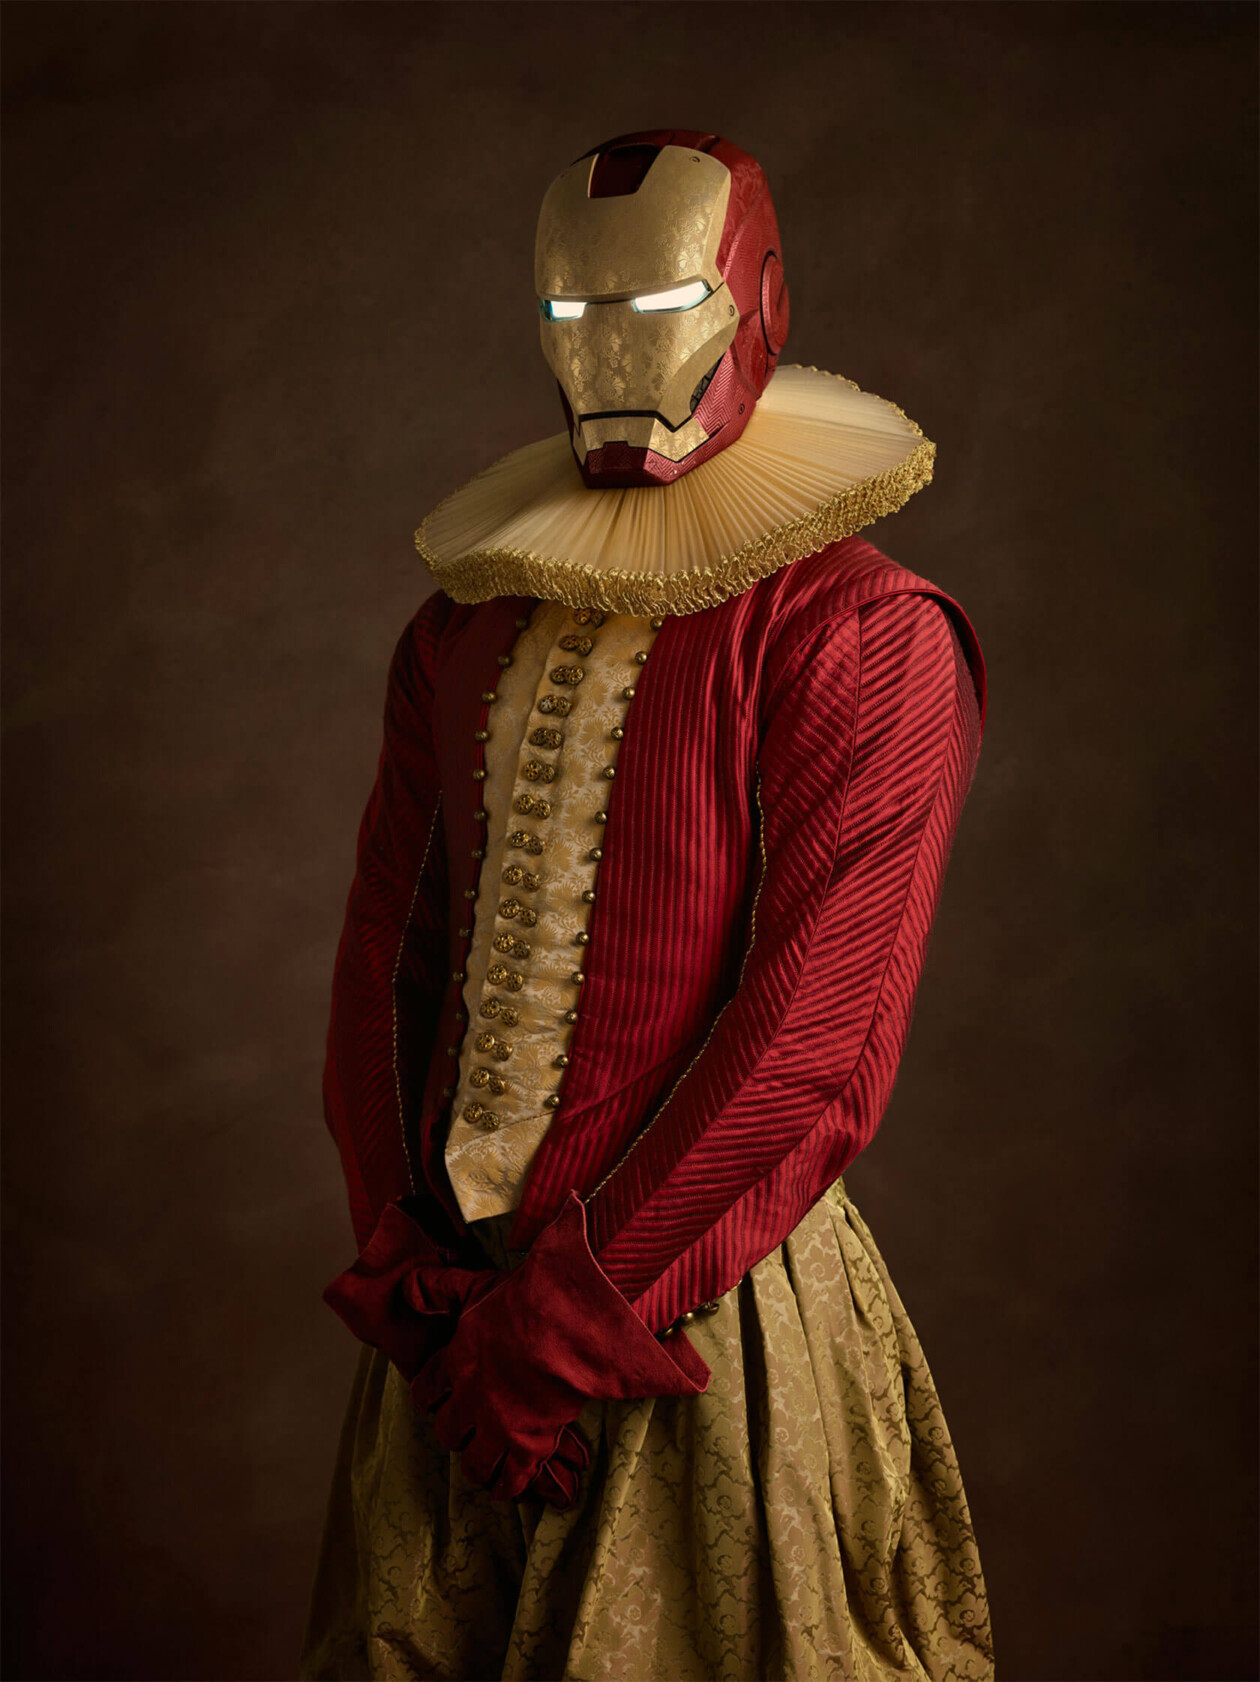 Flemish Superheroes, A Creative Portrait Series By Sacha Goldberger (14)